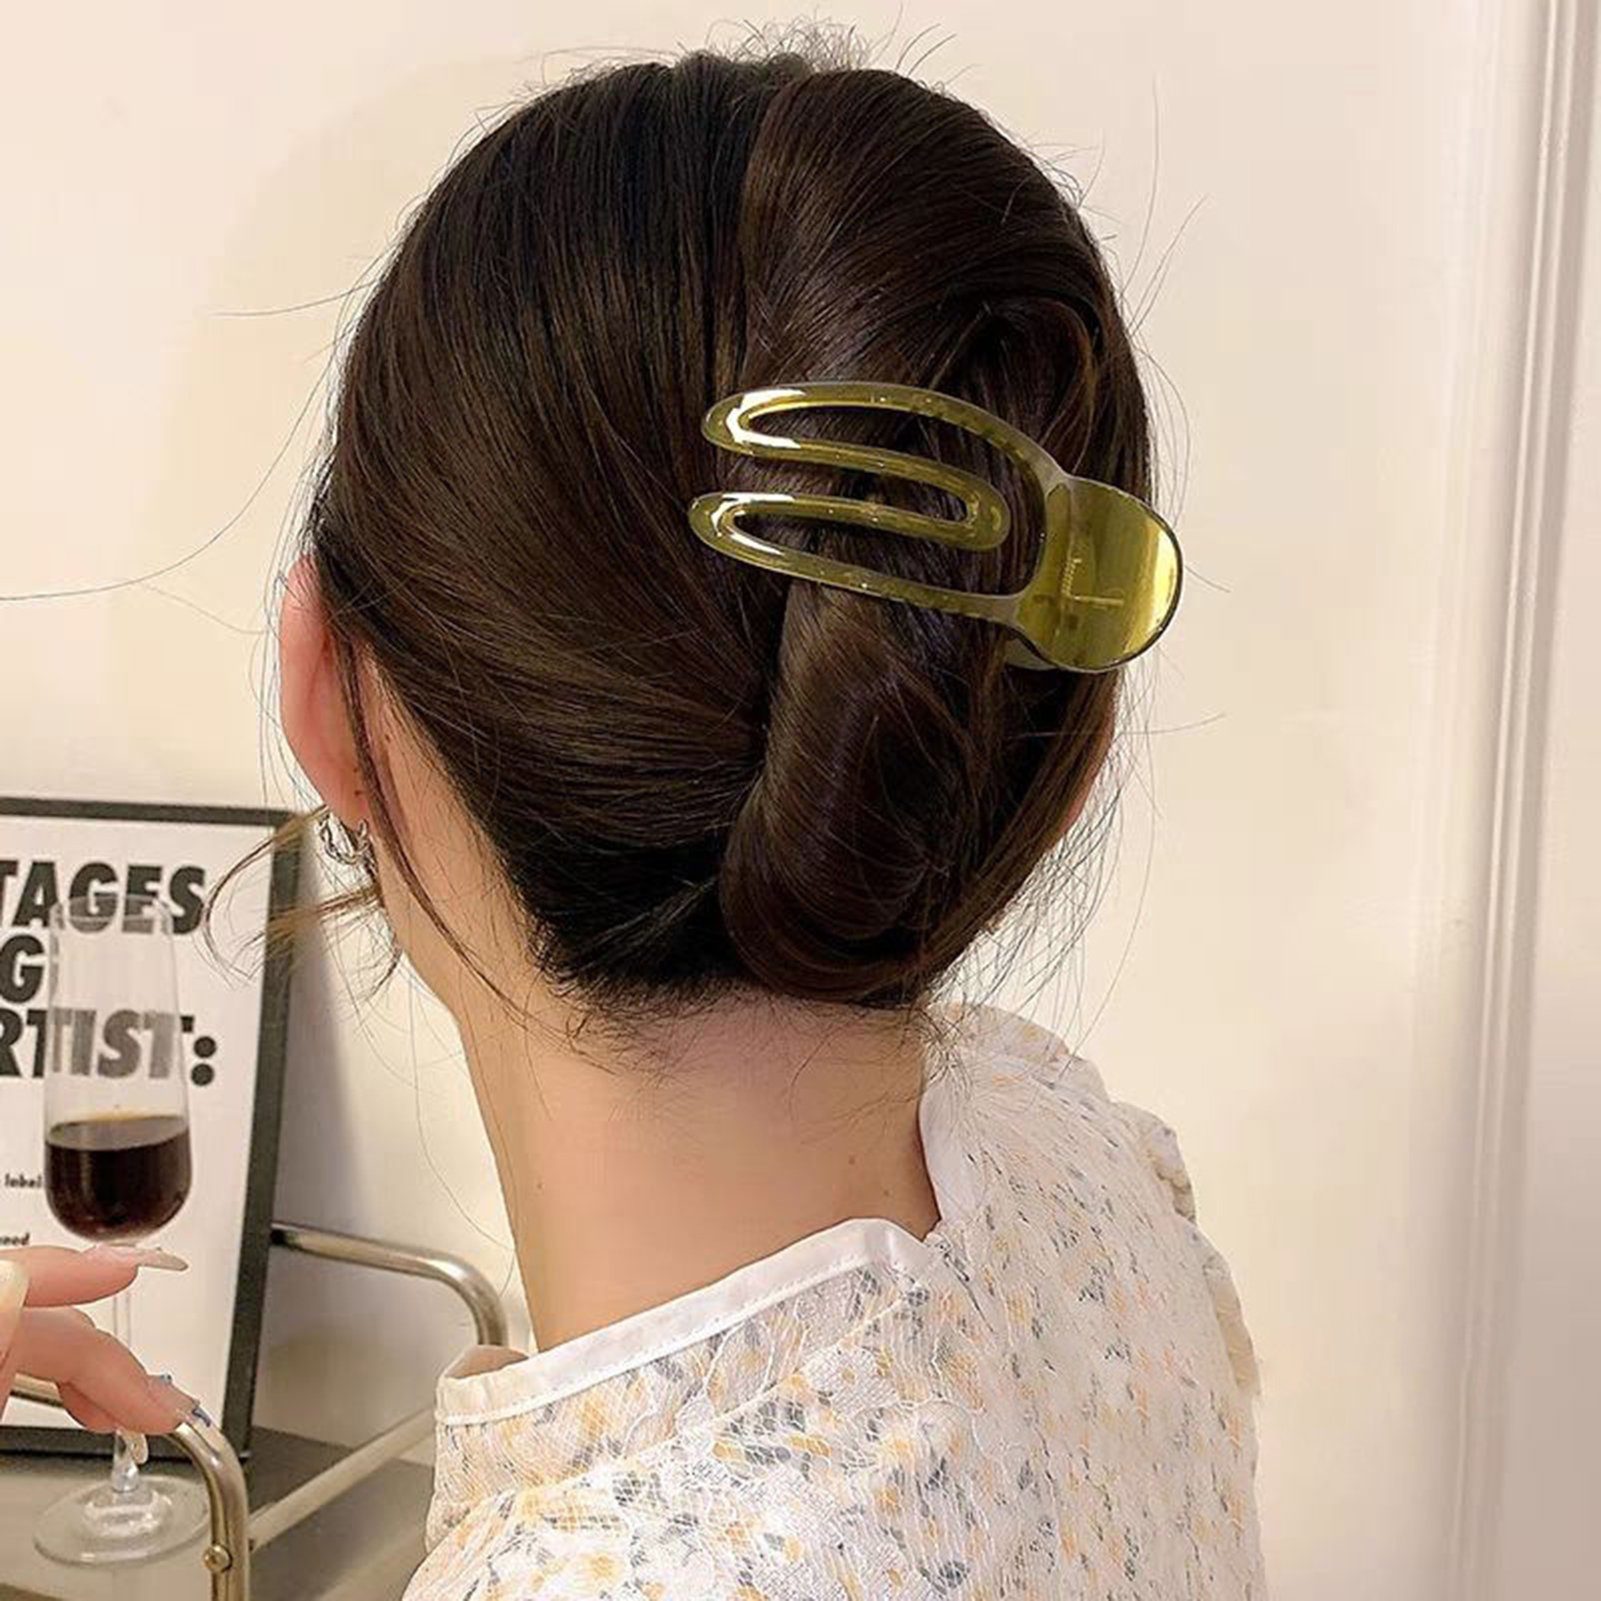 Rutaqian Haarklammer Haarklammer Geleefarbene Clips für Frauen Wild Haarnadel-Kopfschmuck, Modische Haarspangen-Haaraccessoires, Klassischseitig Grün